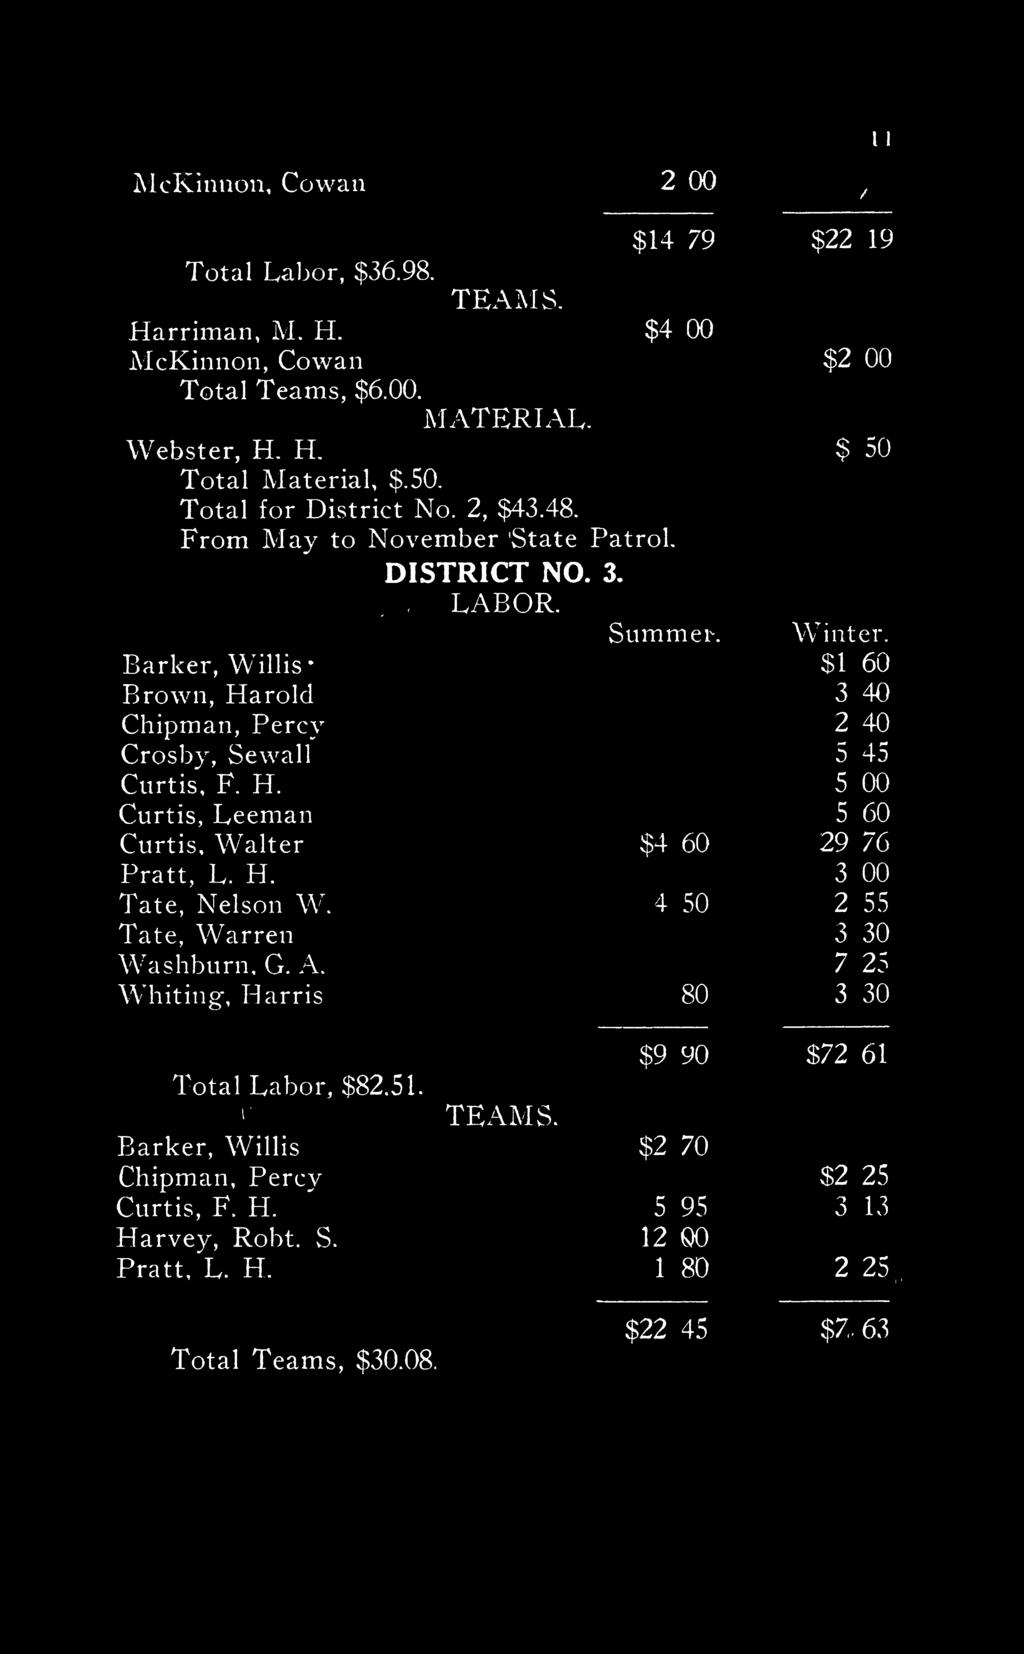 H. Tate, Nelson W. Tate, Warren Washburn. G. A. Whiting", Harris * DISTRICT NO. 3.. LABOR. Summer. $4 60 4 50 80 Winter.